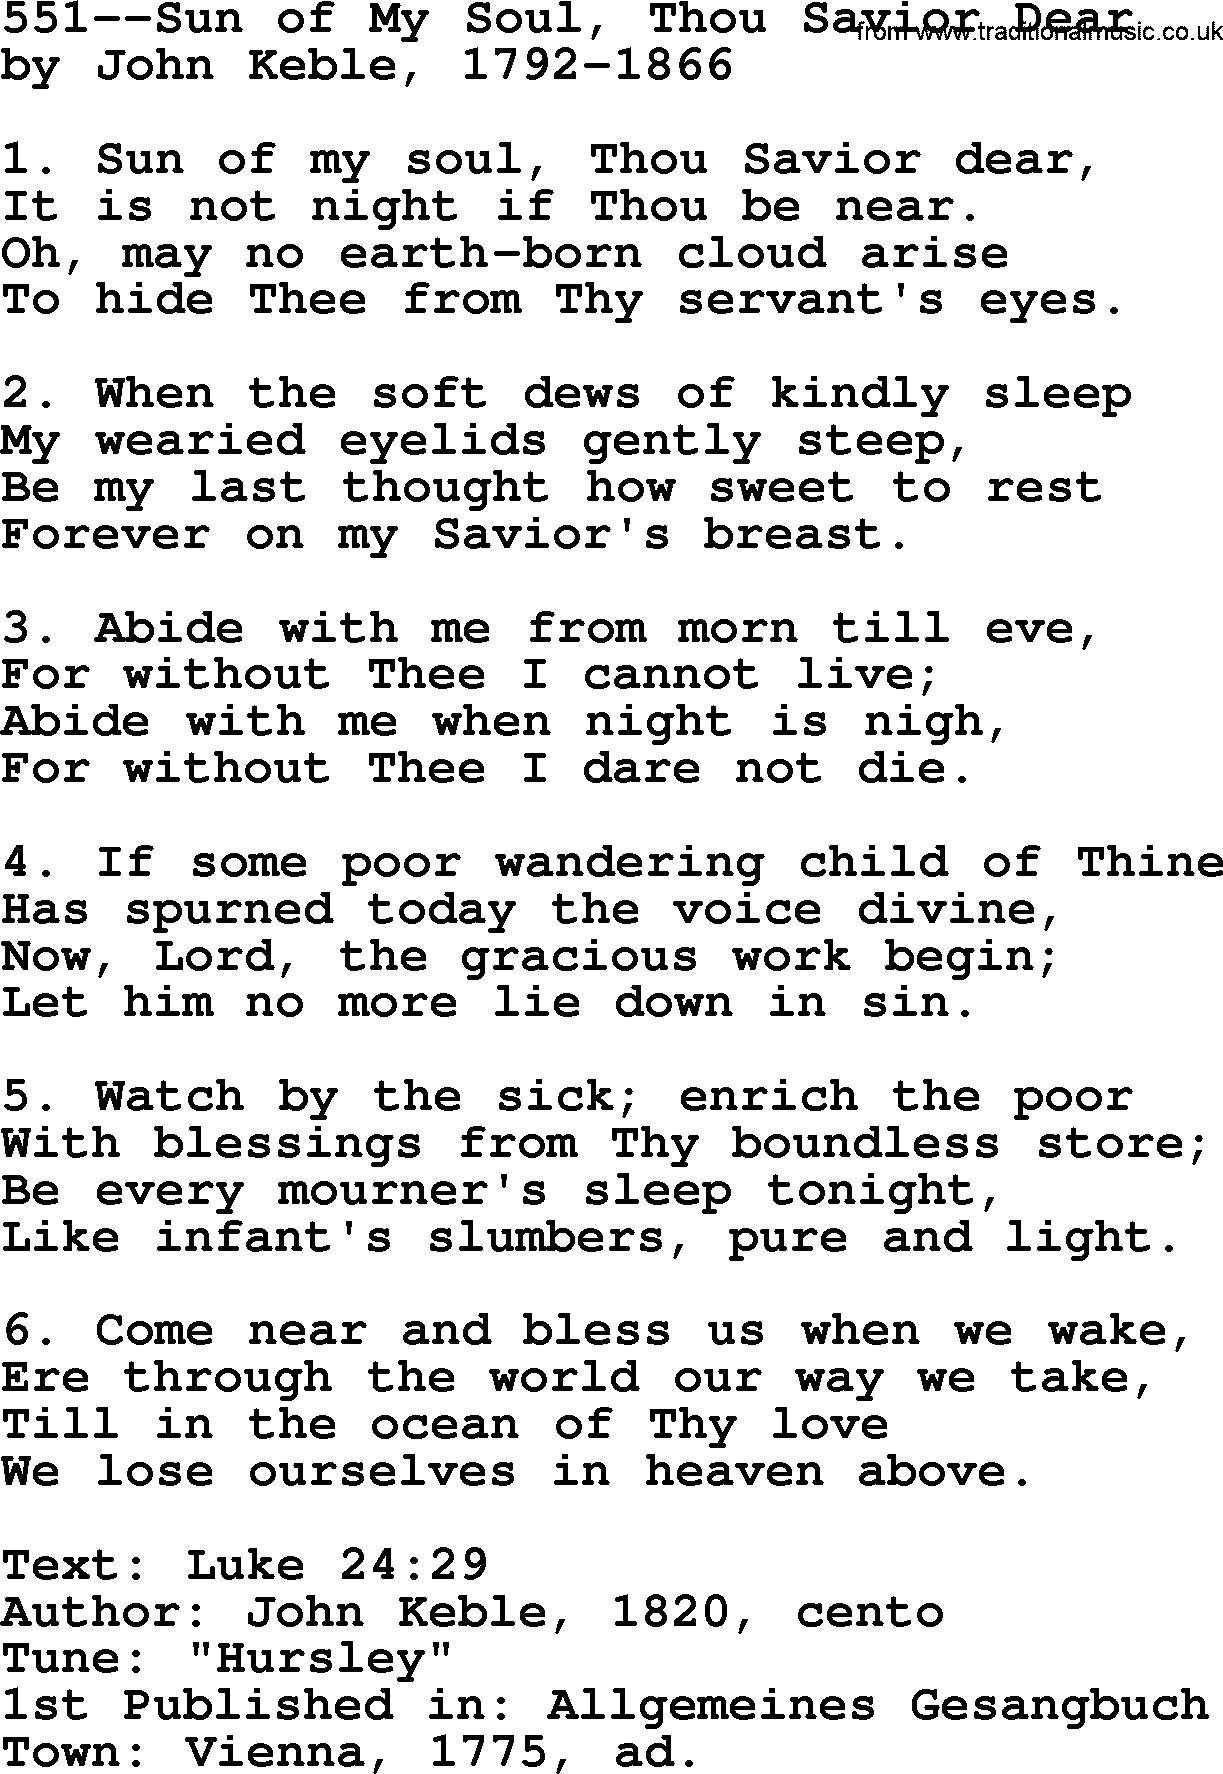 Lutheran Hymn: 551--Sun of My Soul, Thou Savior Dear.txt lyrics with PDF